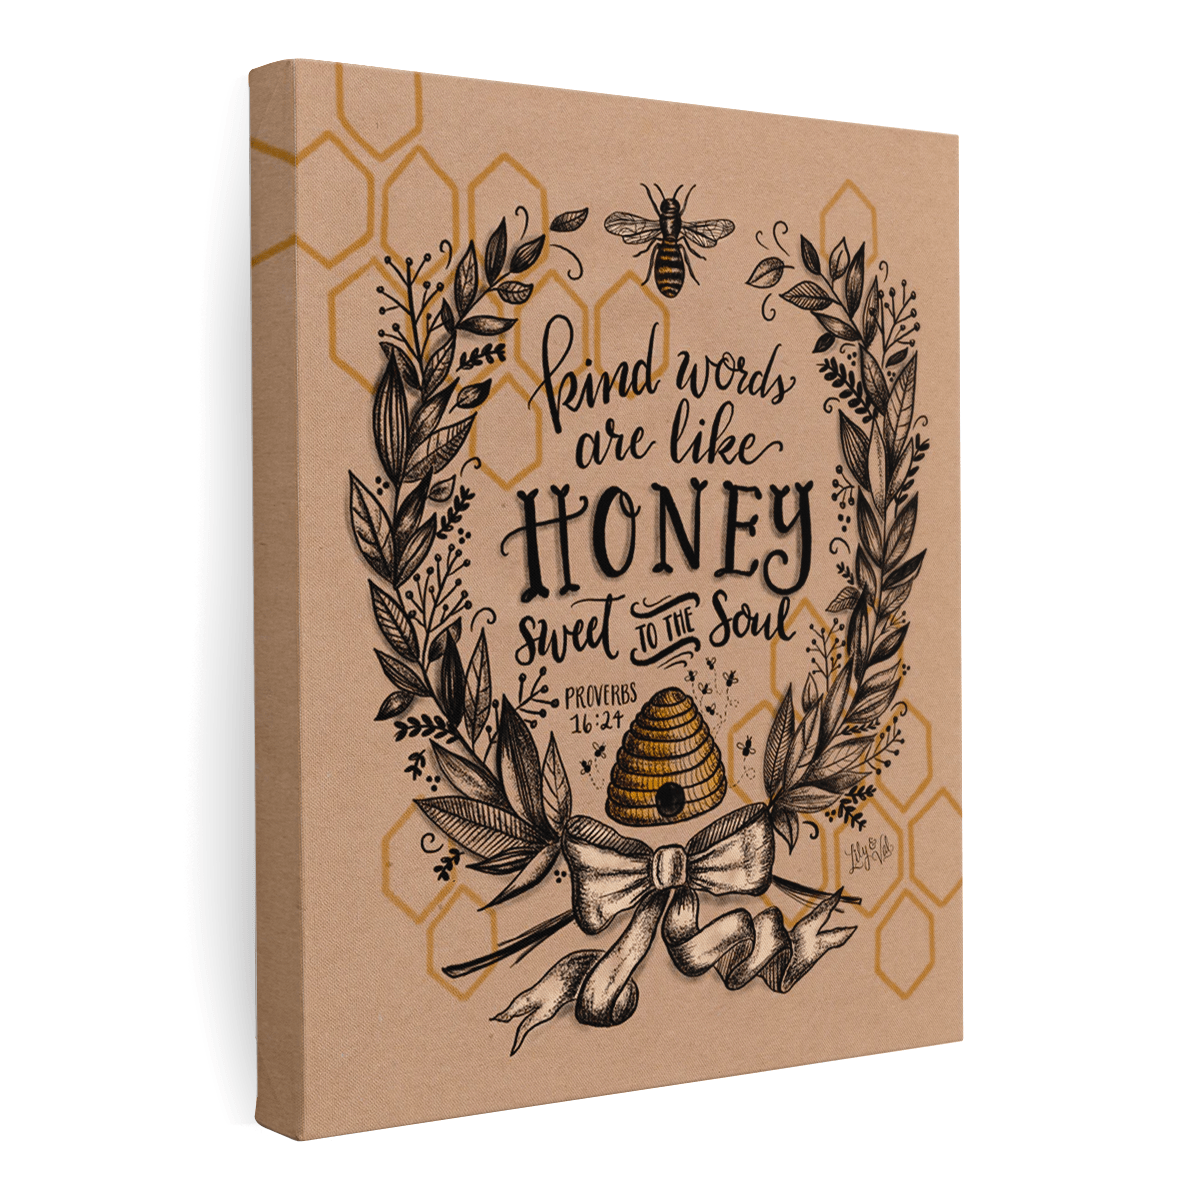 Kind Words Are Like Honey - Kraft Paper Print